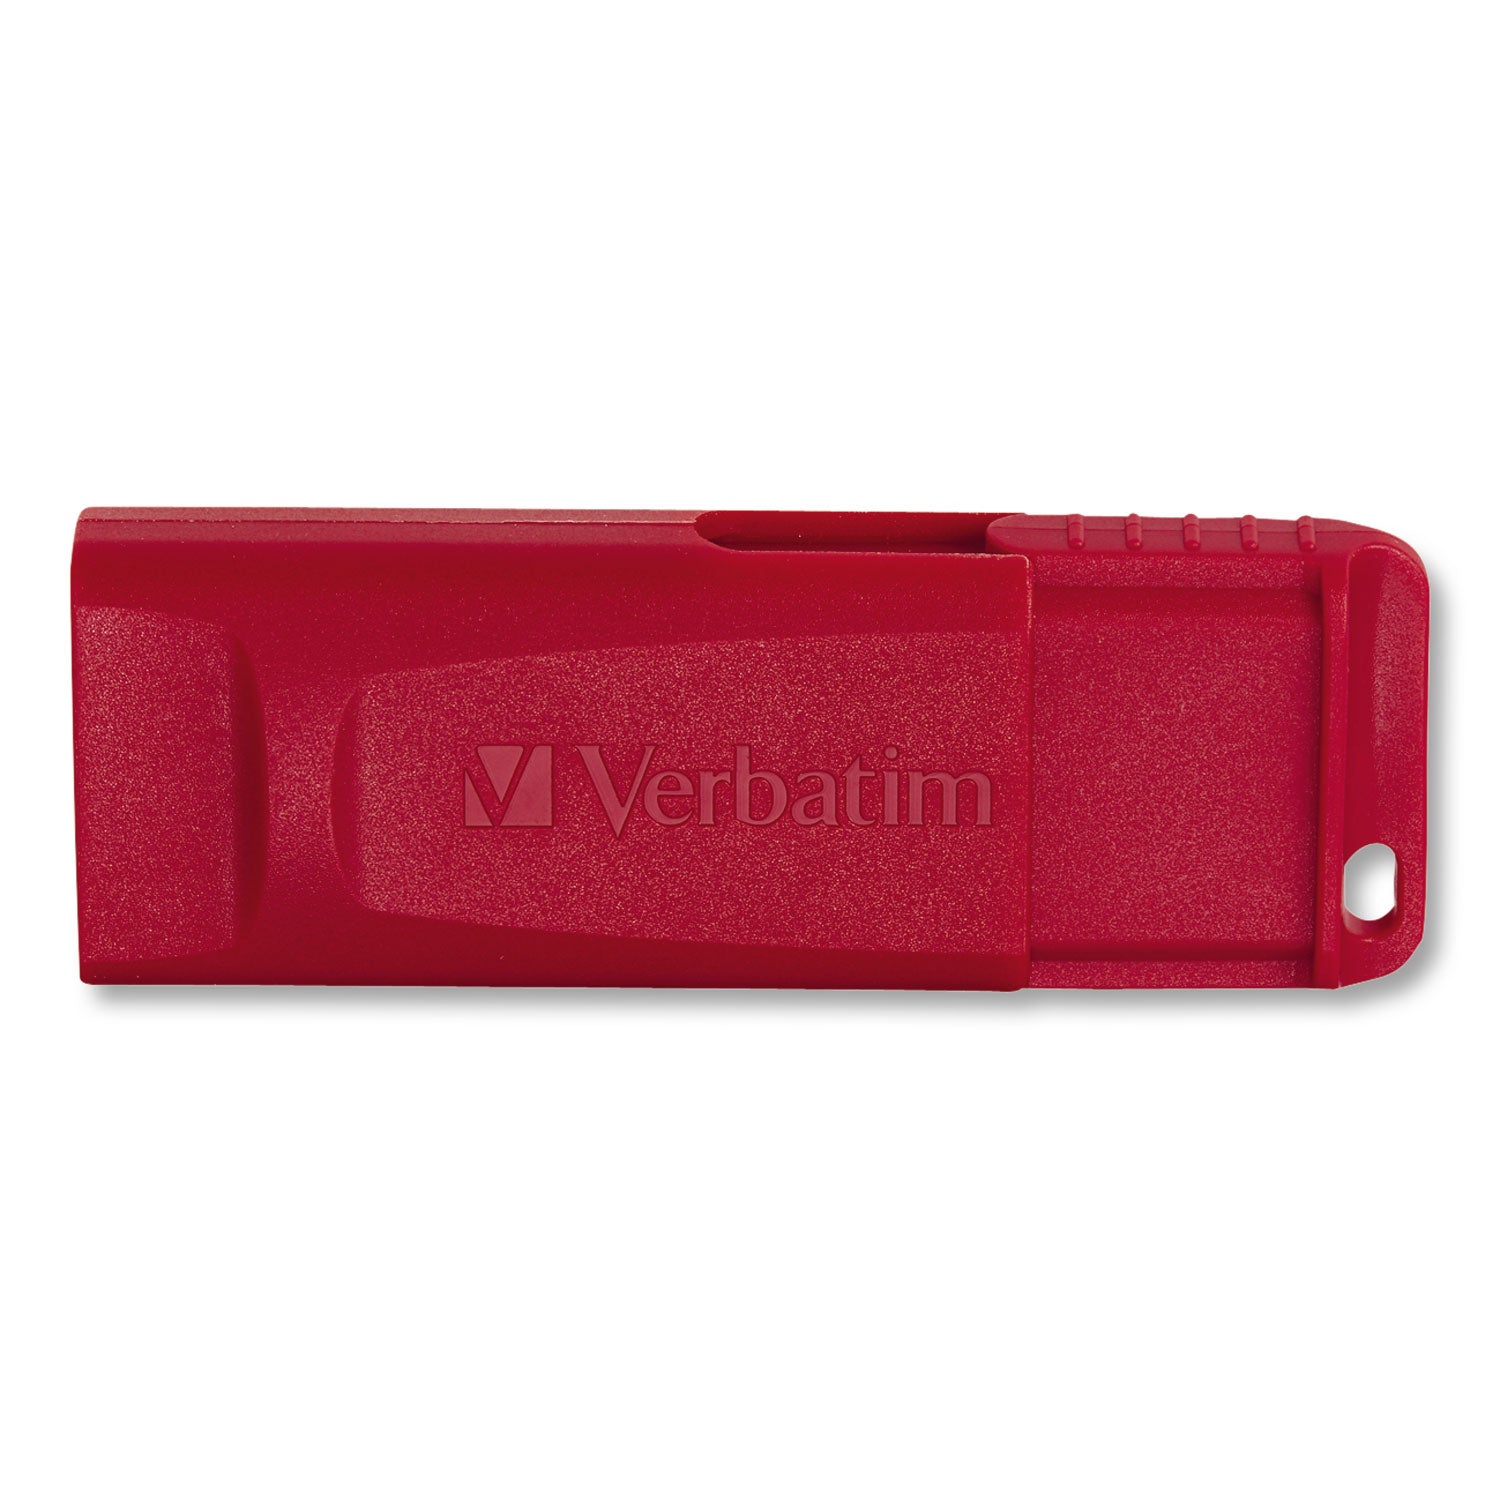 Store 'n' Go USB Flash Drive, 16 GB, Red - 